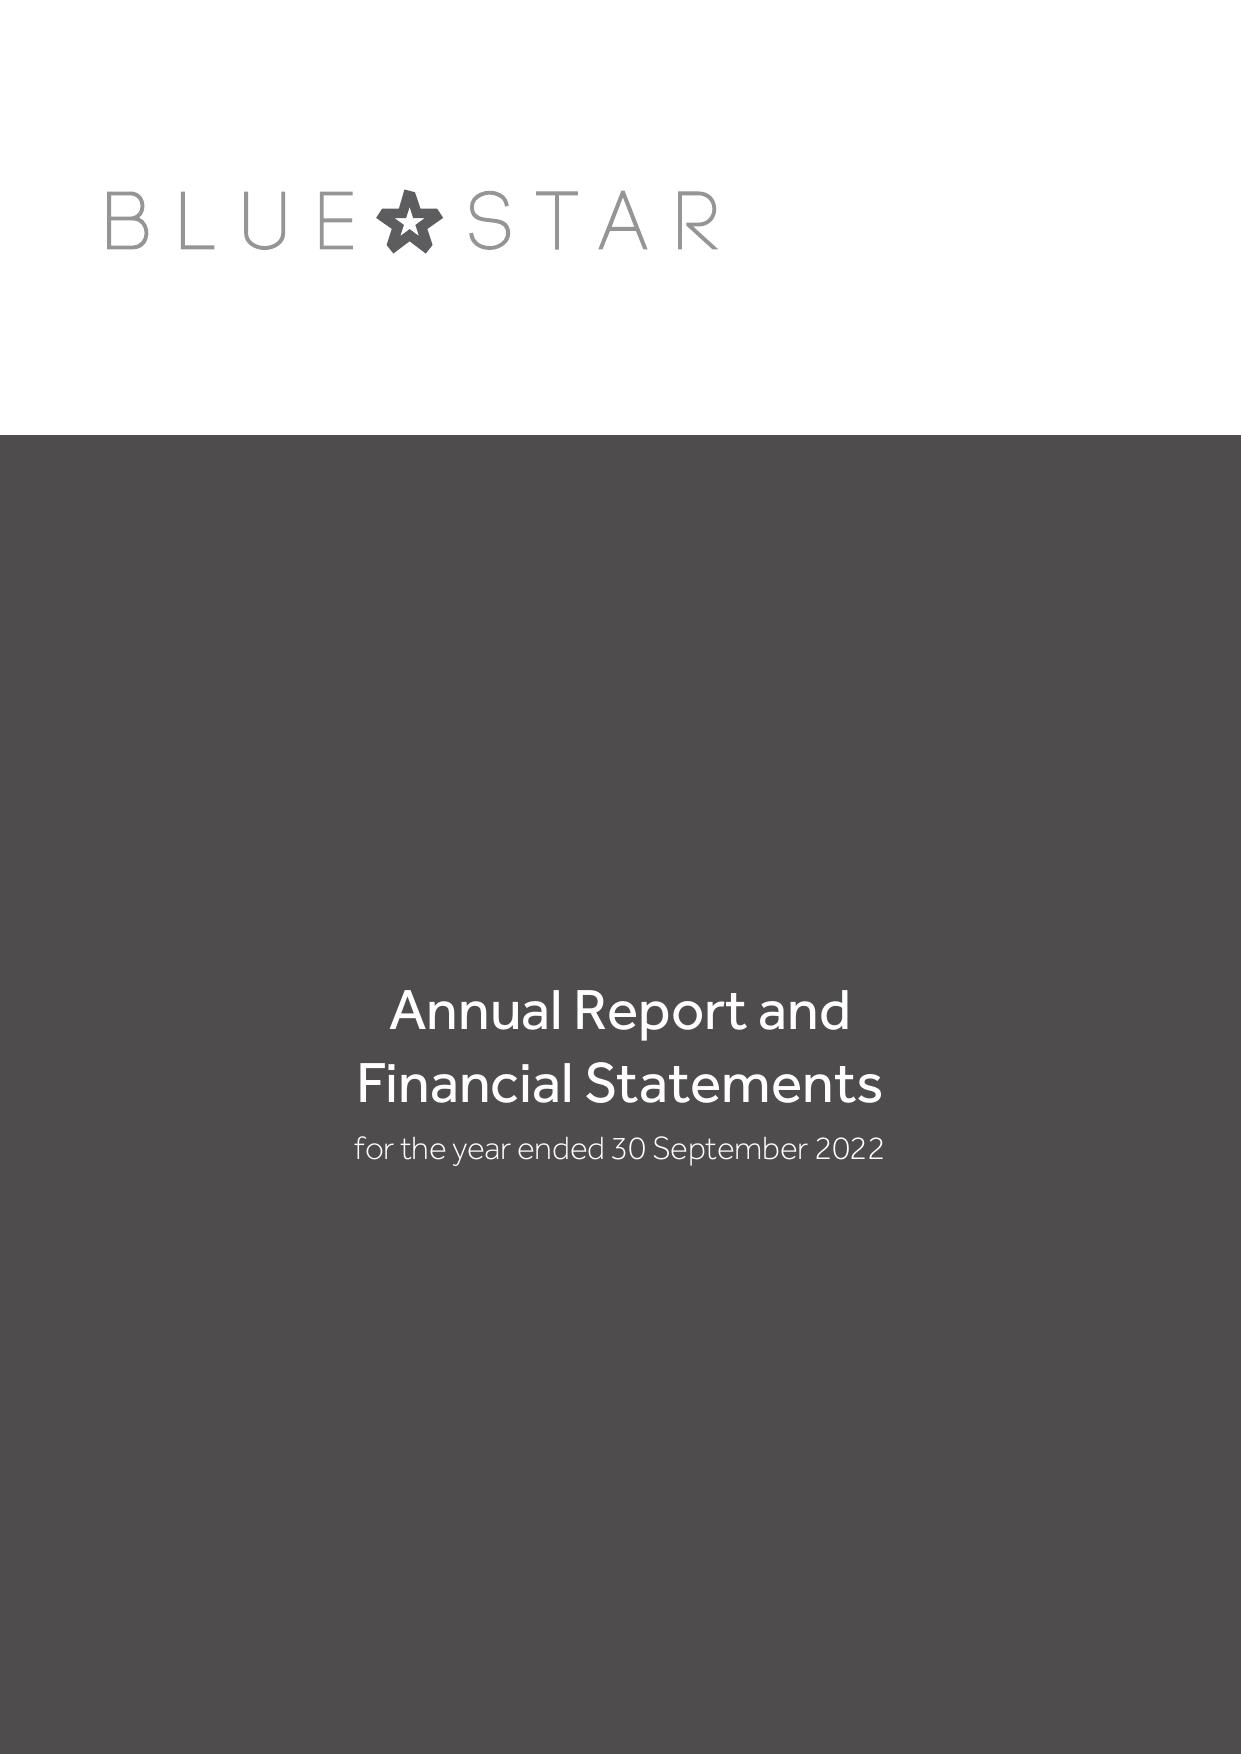 BLUESTARCAPITAL 2023 Annual Report